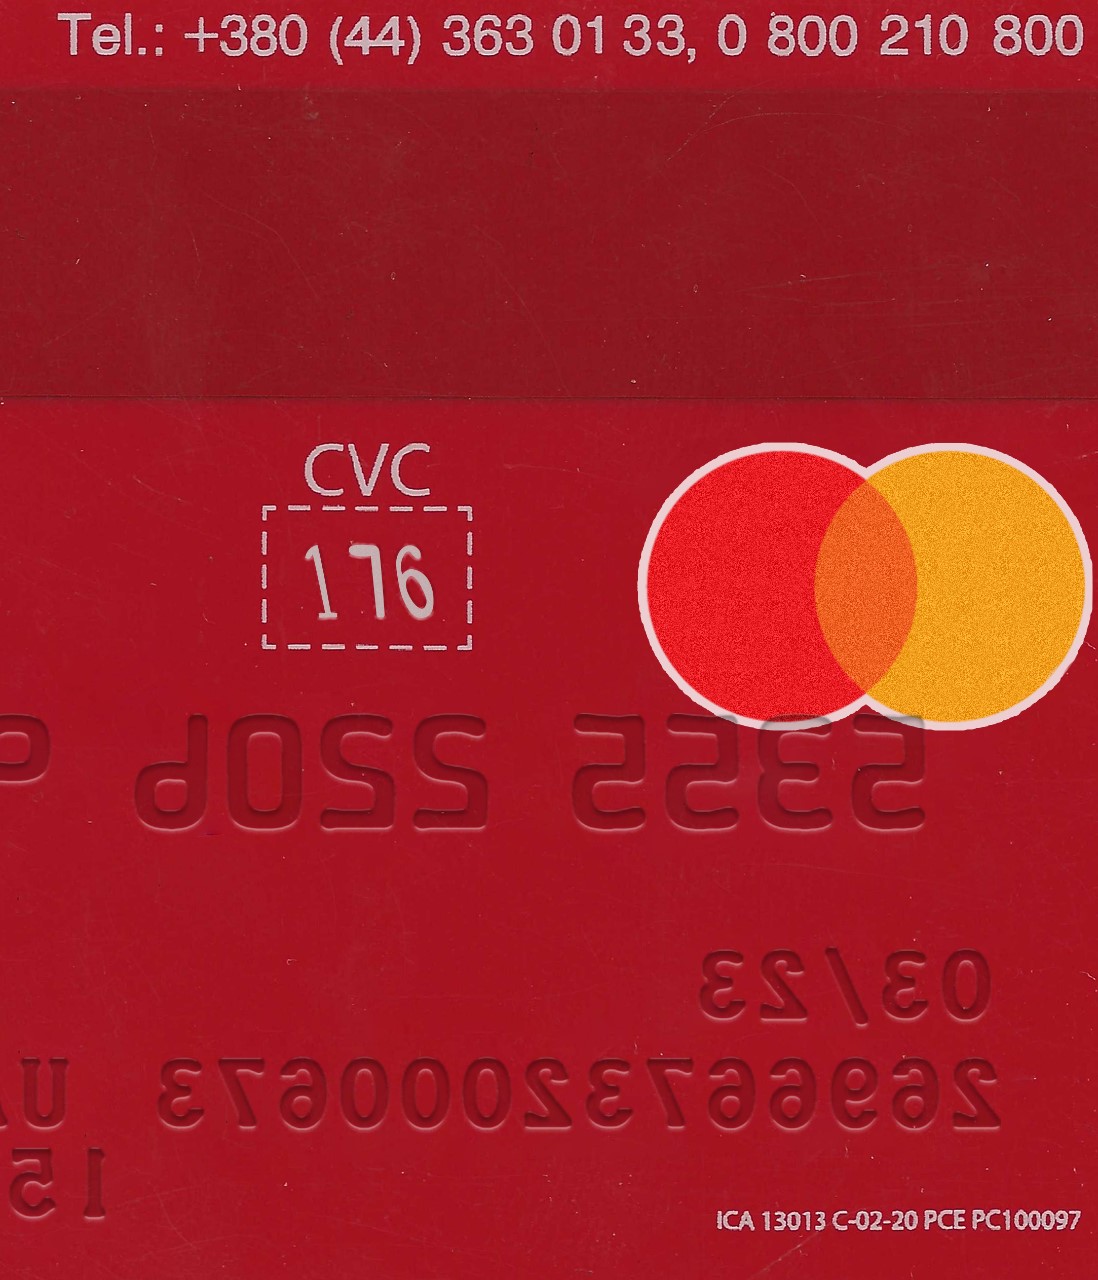 Ukraine Credit Card-4